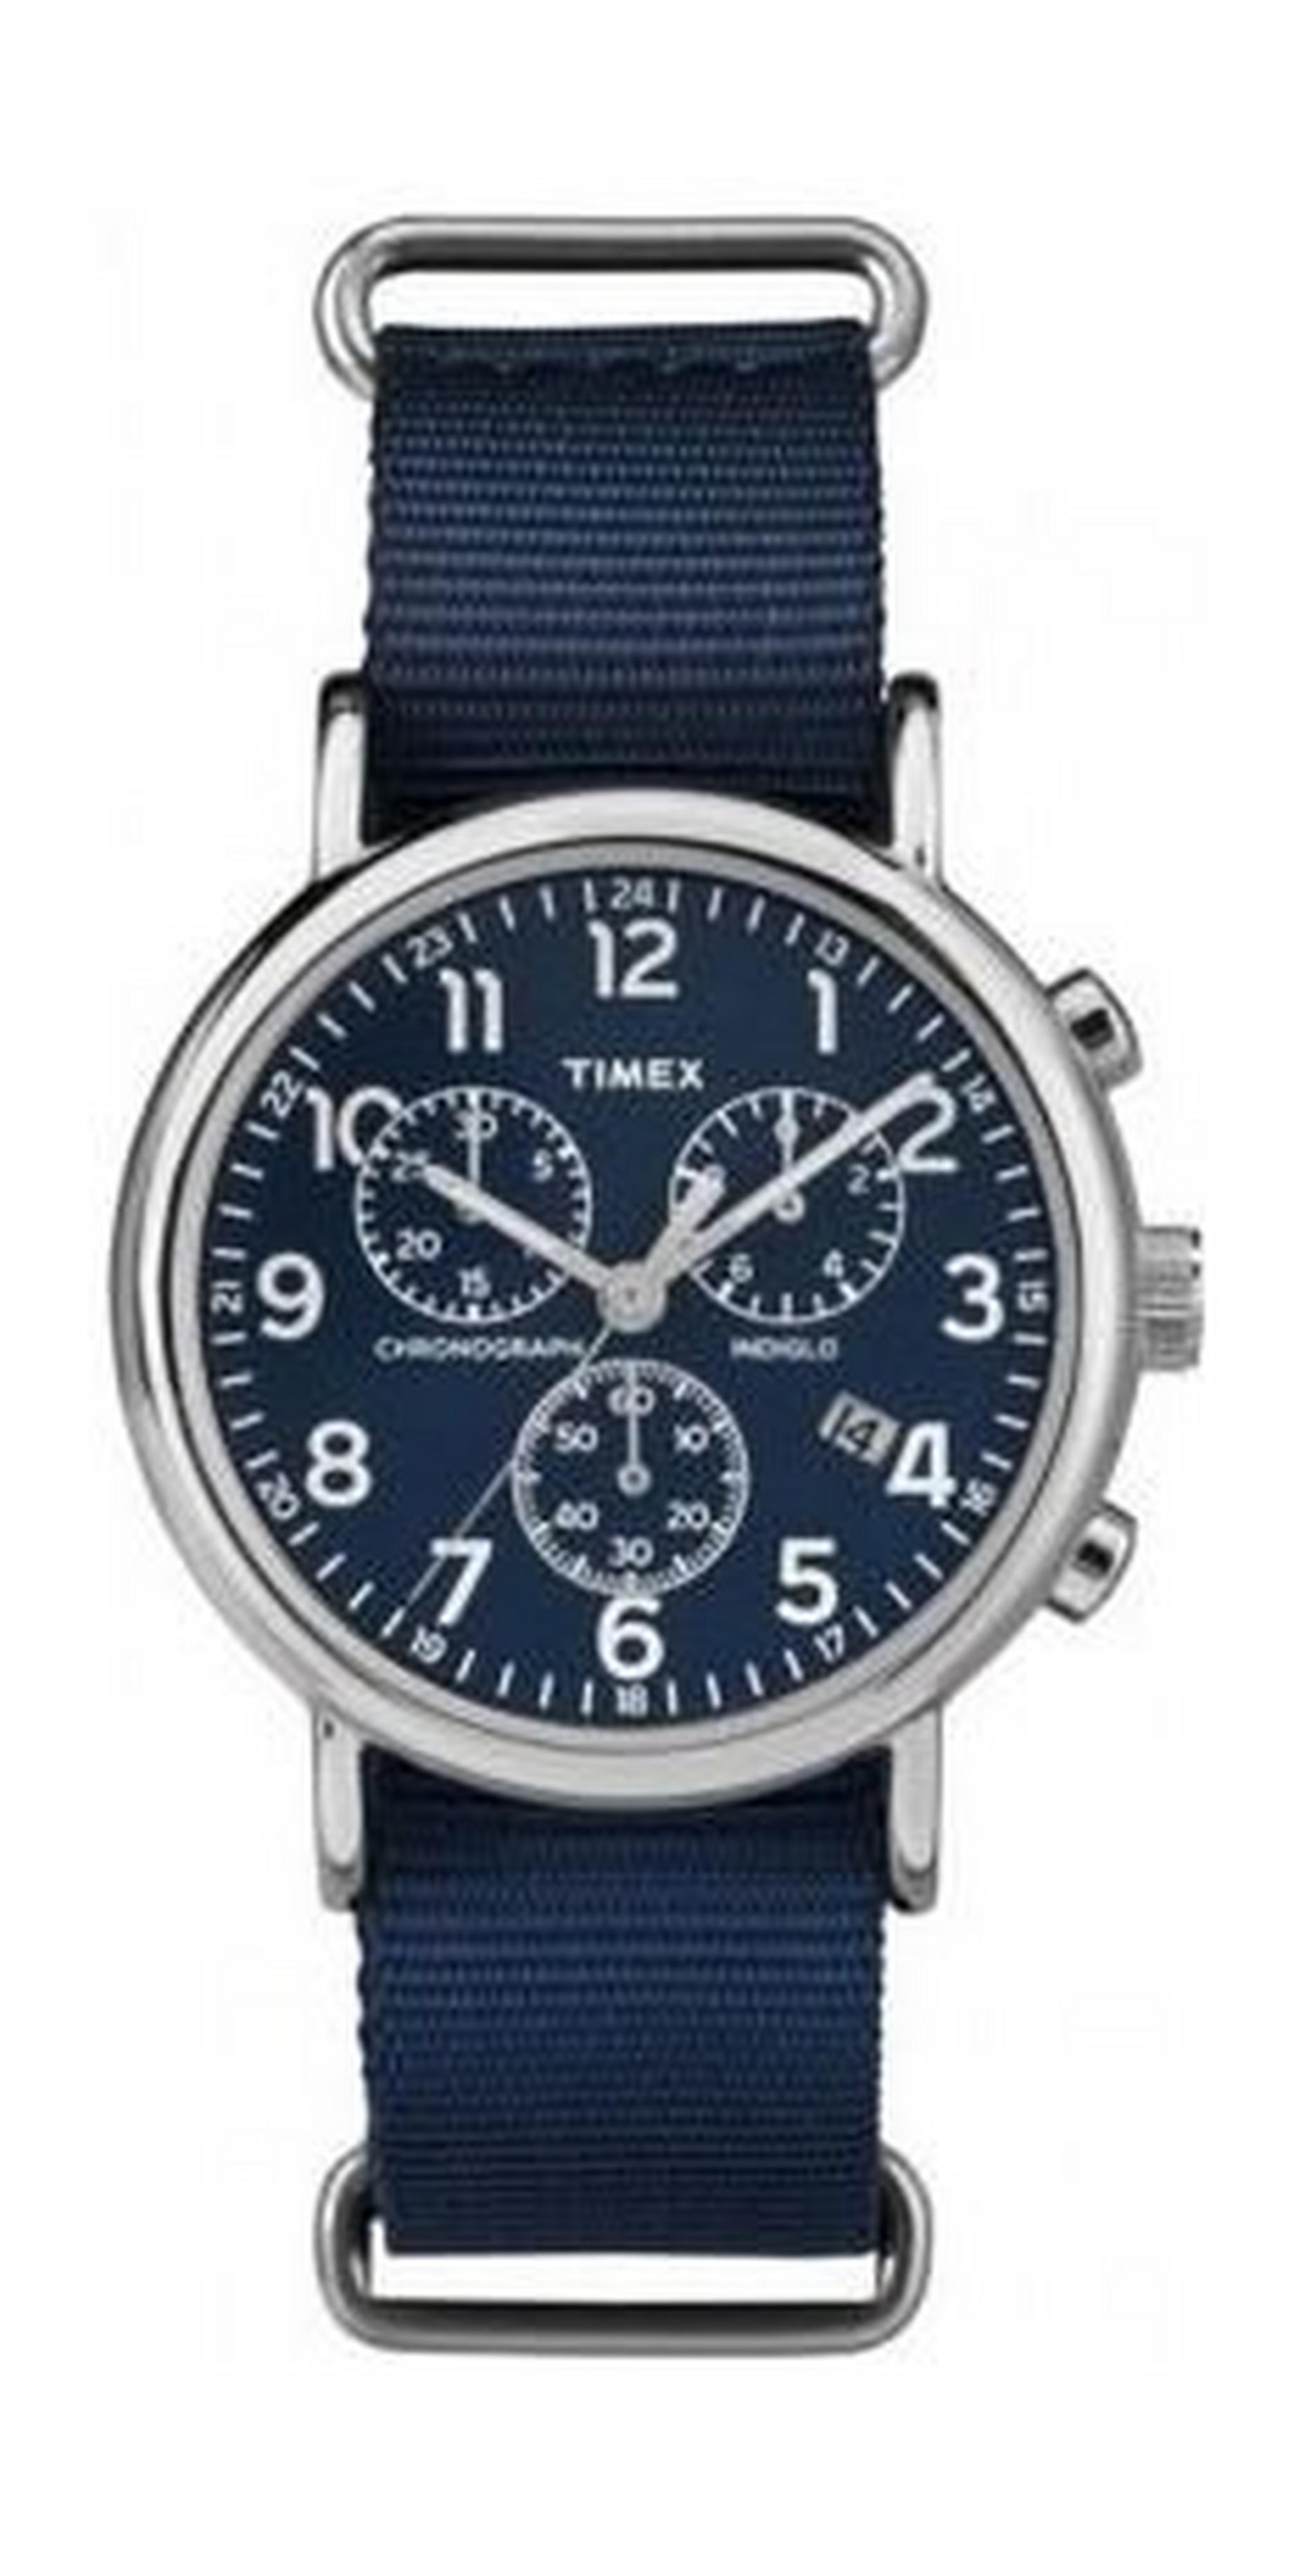 Timex Weekender Chronograph Gents Watch - Nylon Strap TW2P71300